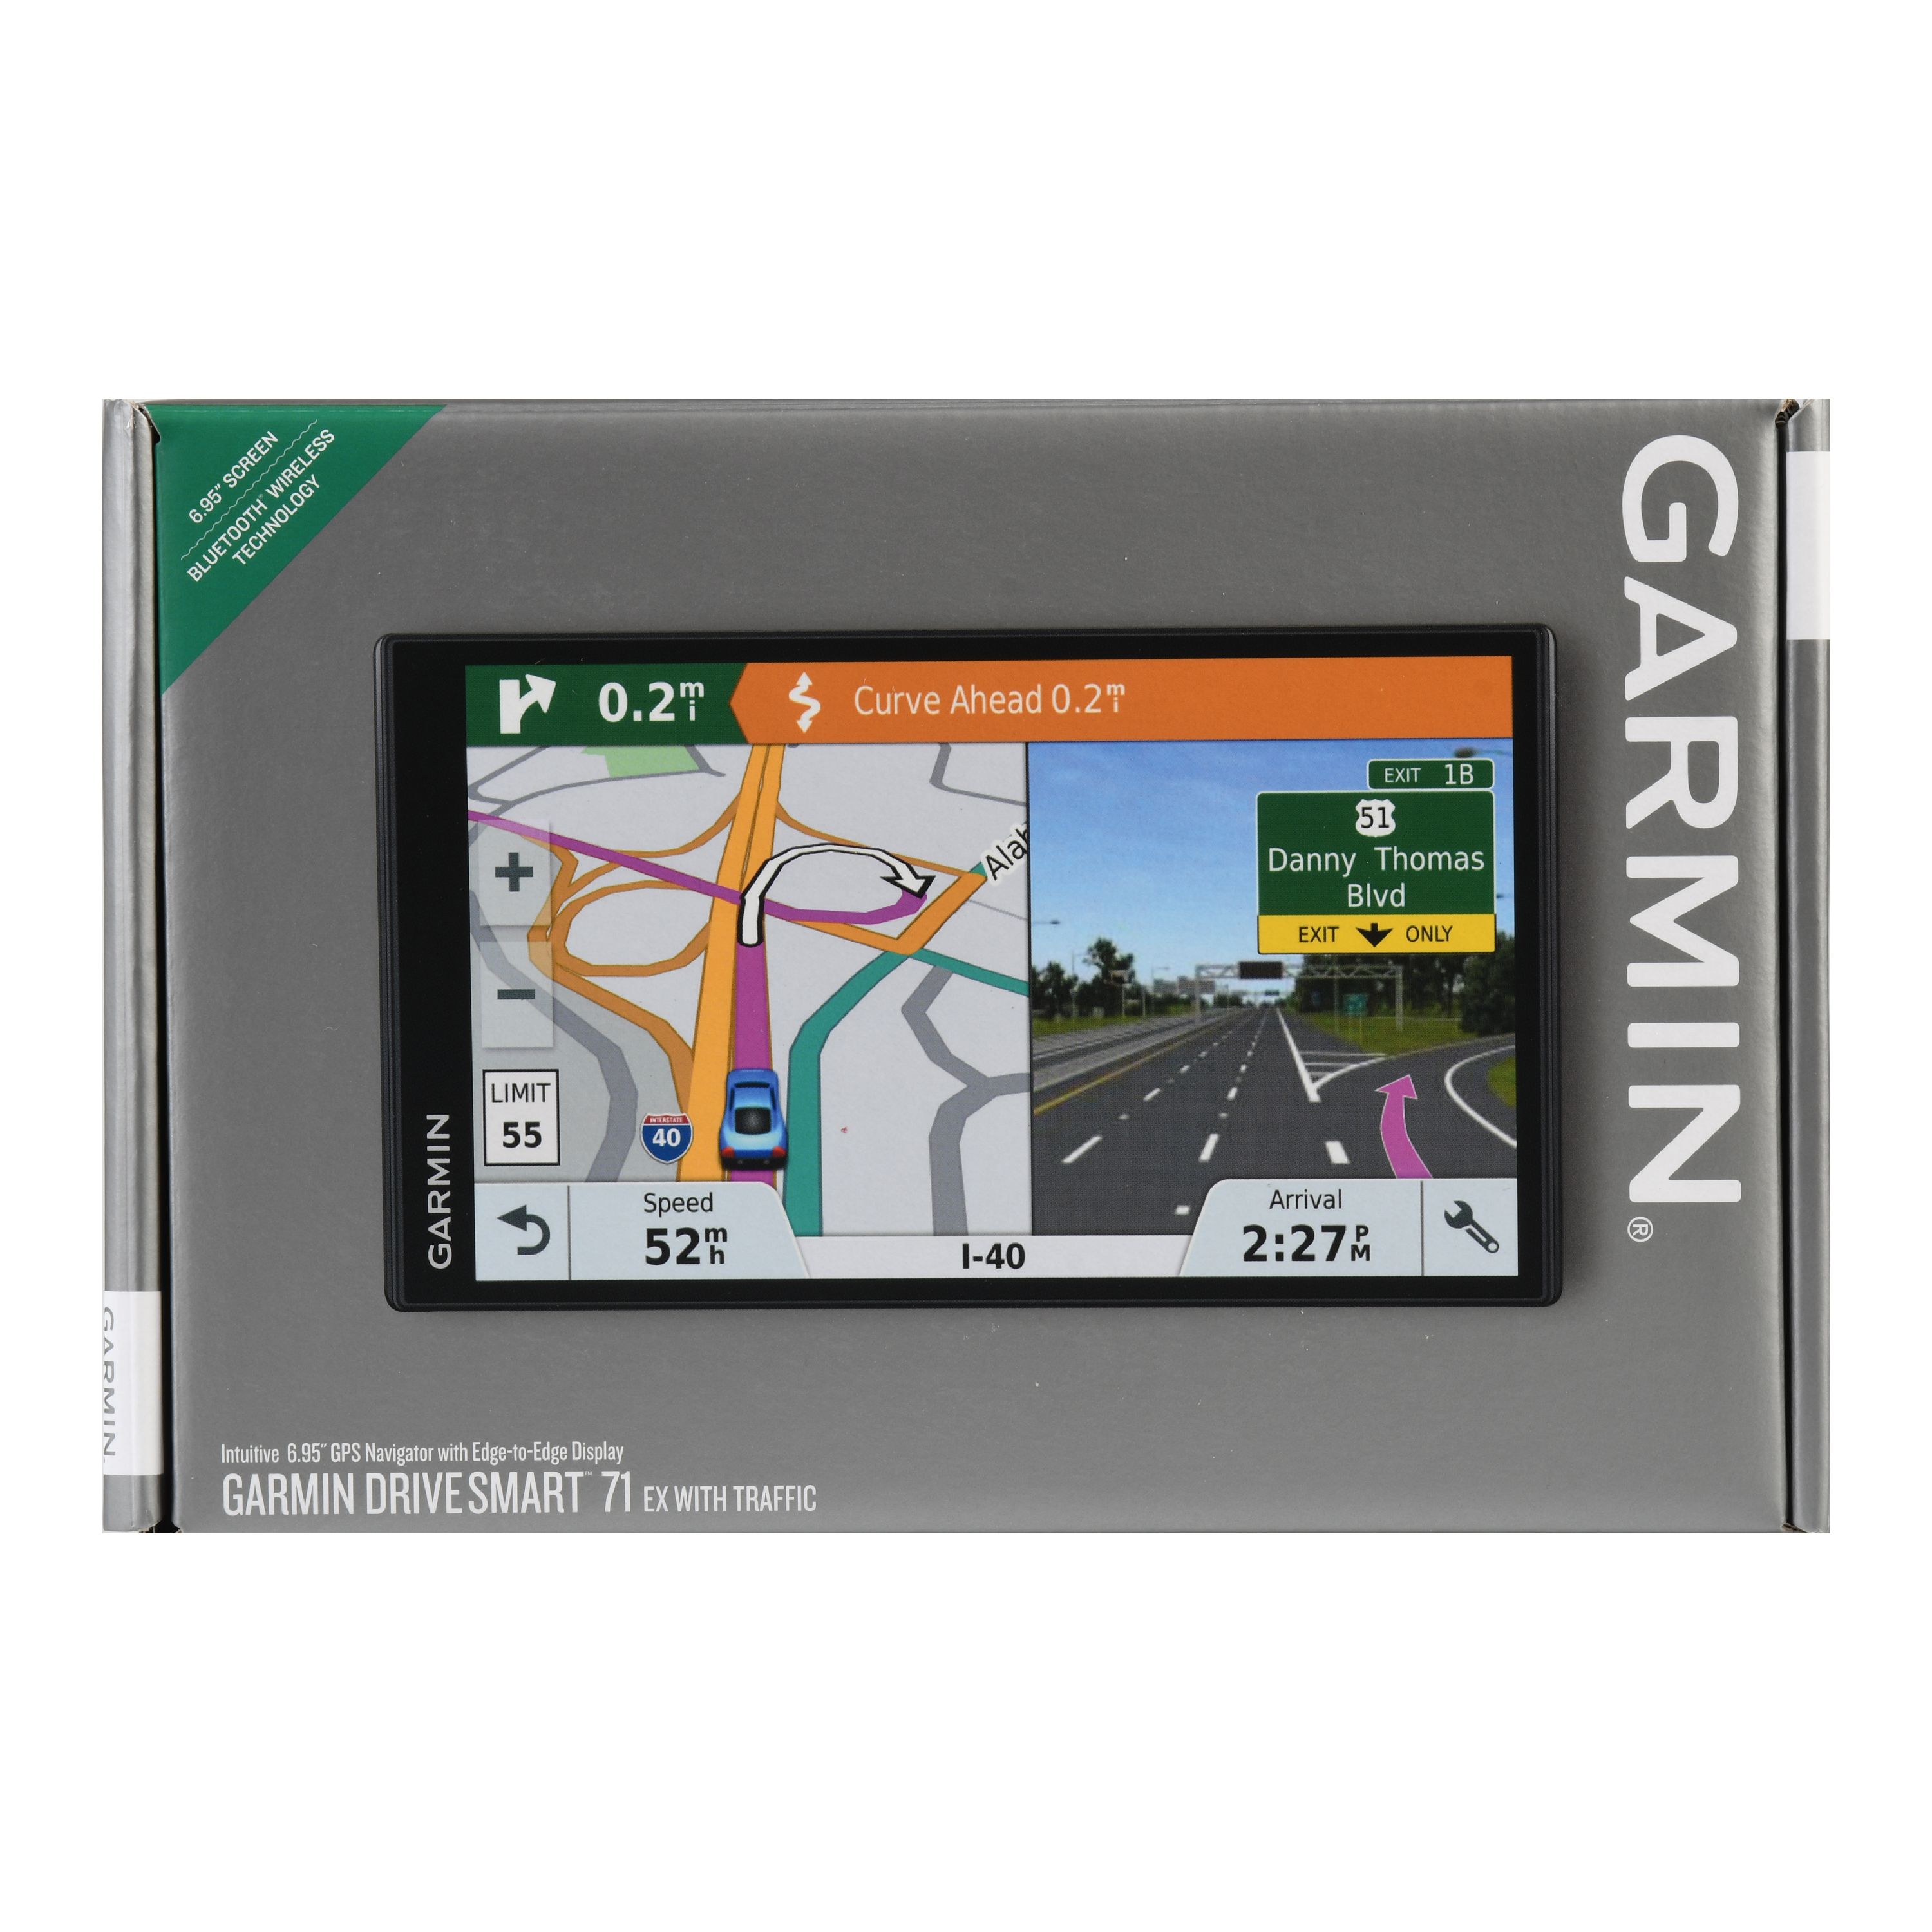 Garmin DriveSmart 71 with traffic EX - image 1 of 7